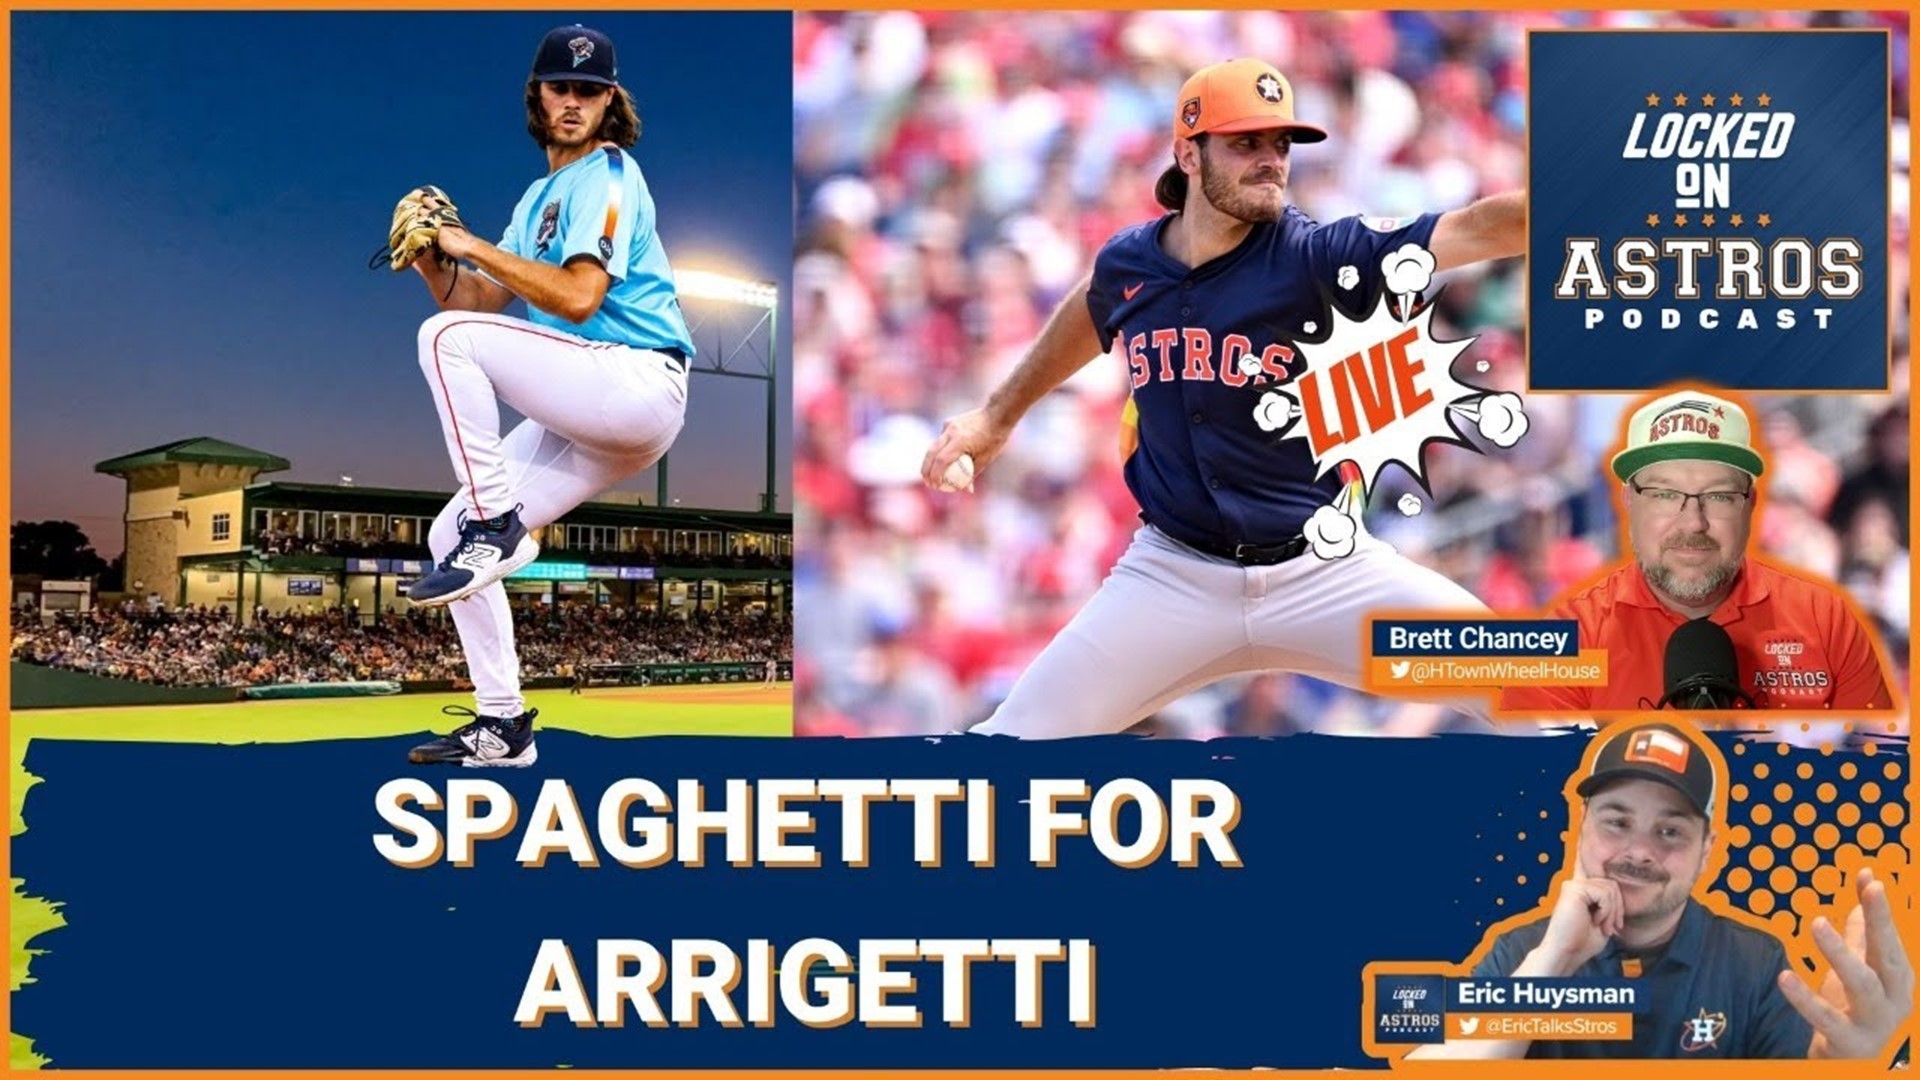 Astros: Spaghetti for Arrighetti